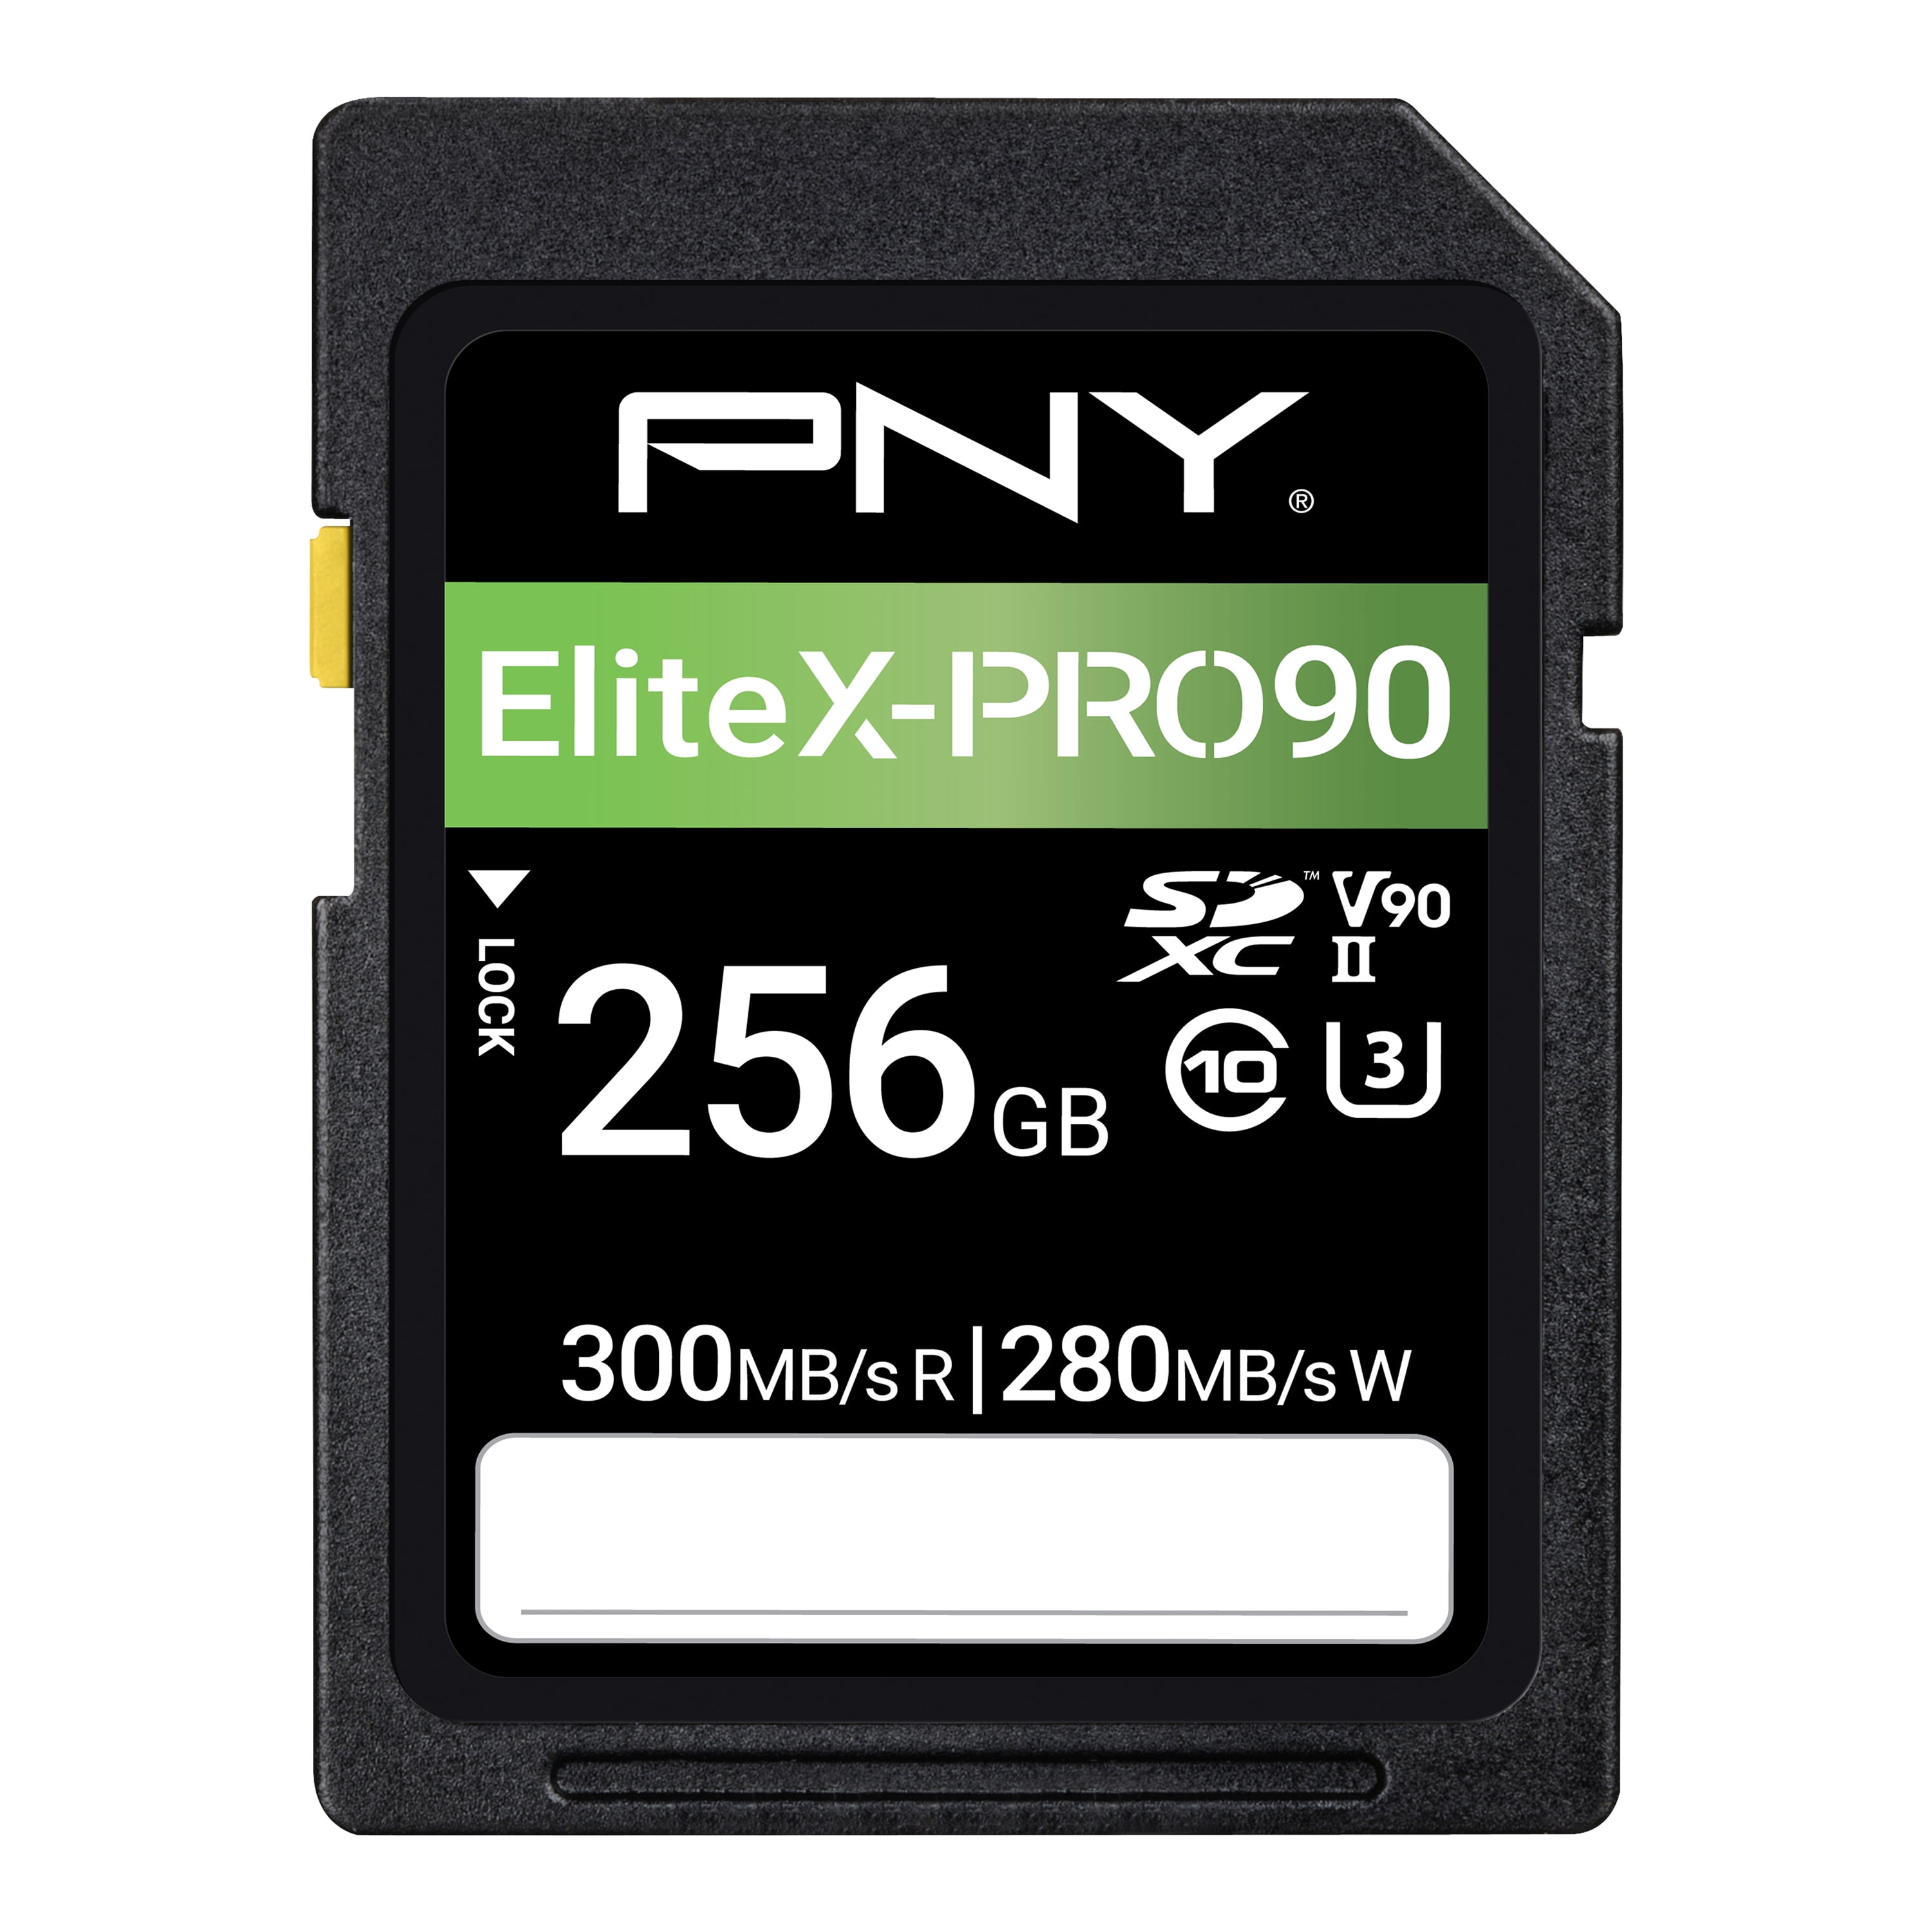 PNY 128GB EliteX-PRO90 Class 10 U3 V90 UHS-II SDXC Flash Memory Card​